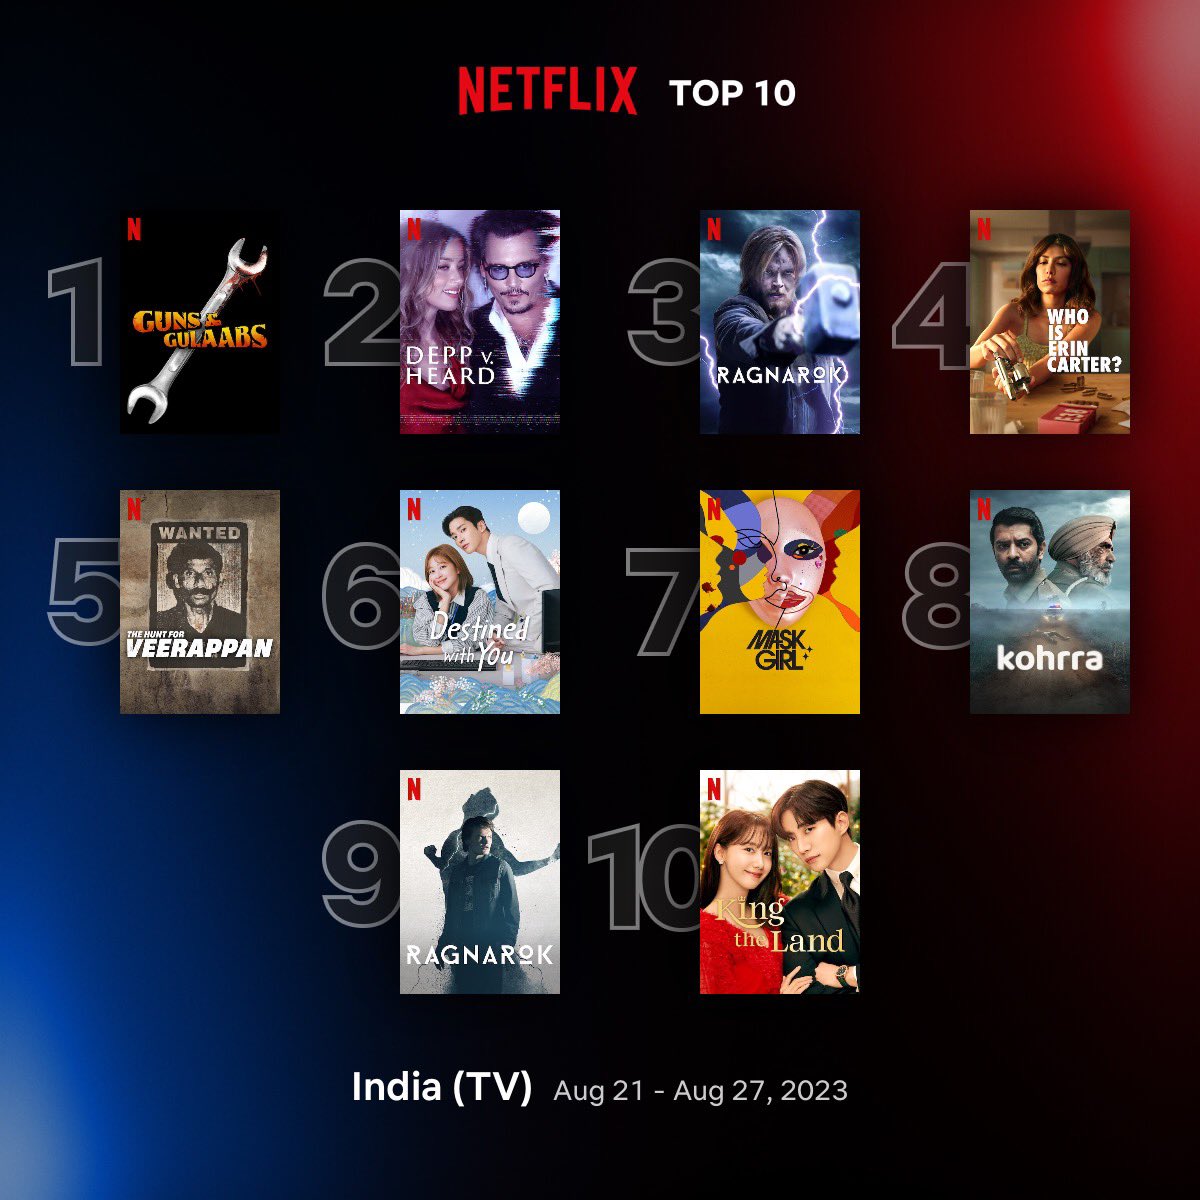 Top 10 TV Series on #NetflixIndia between 21 - 27 August:

1. #GunsAndGulaabs 🇮🇳 @dulQuer ❤👏
 2. #DeppVHeard 🇺🇸
3. #Ragnarok: S3 🇳🇴 
4. #WhoIsErinCarter 🇬🇧
5. #TheHuntForVeerappan 🇮🇳
6. #DestinedWithYou 🇰🇷
7. #MaskGirl 🇰🇷
8. #Kohrra 🇮🇳
9. #Ragnarok: S1 🇳🇴 
10. #KingTheLand 🇰🇷